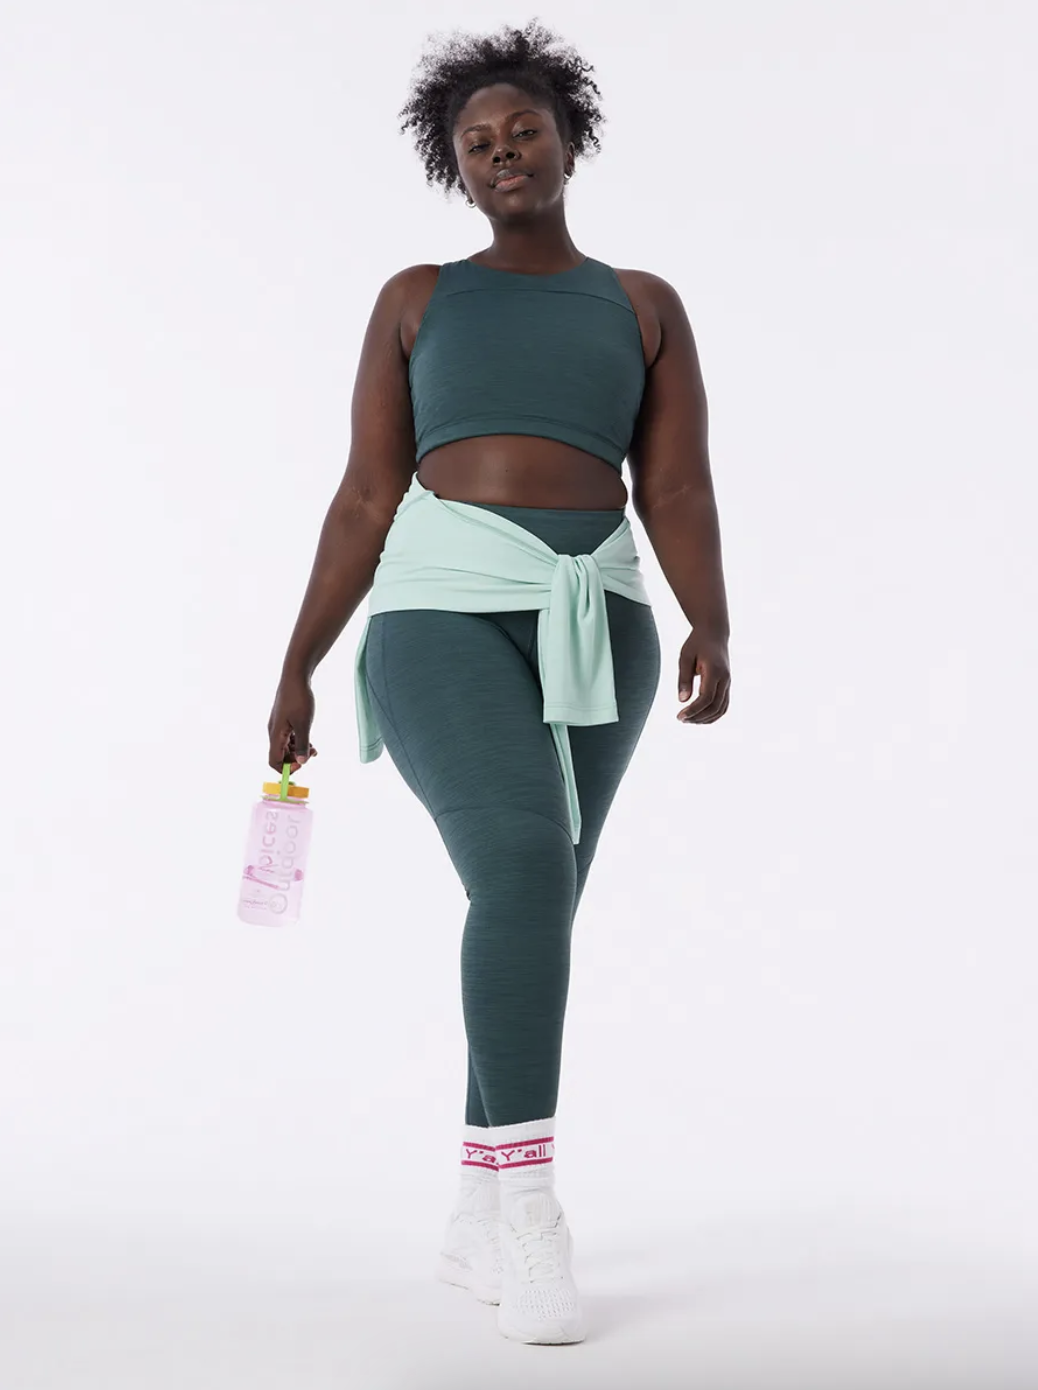 model wearing a green workout set